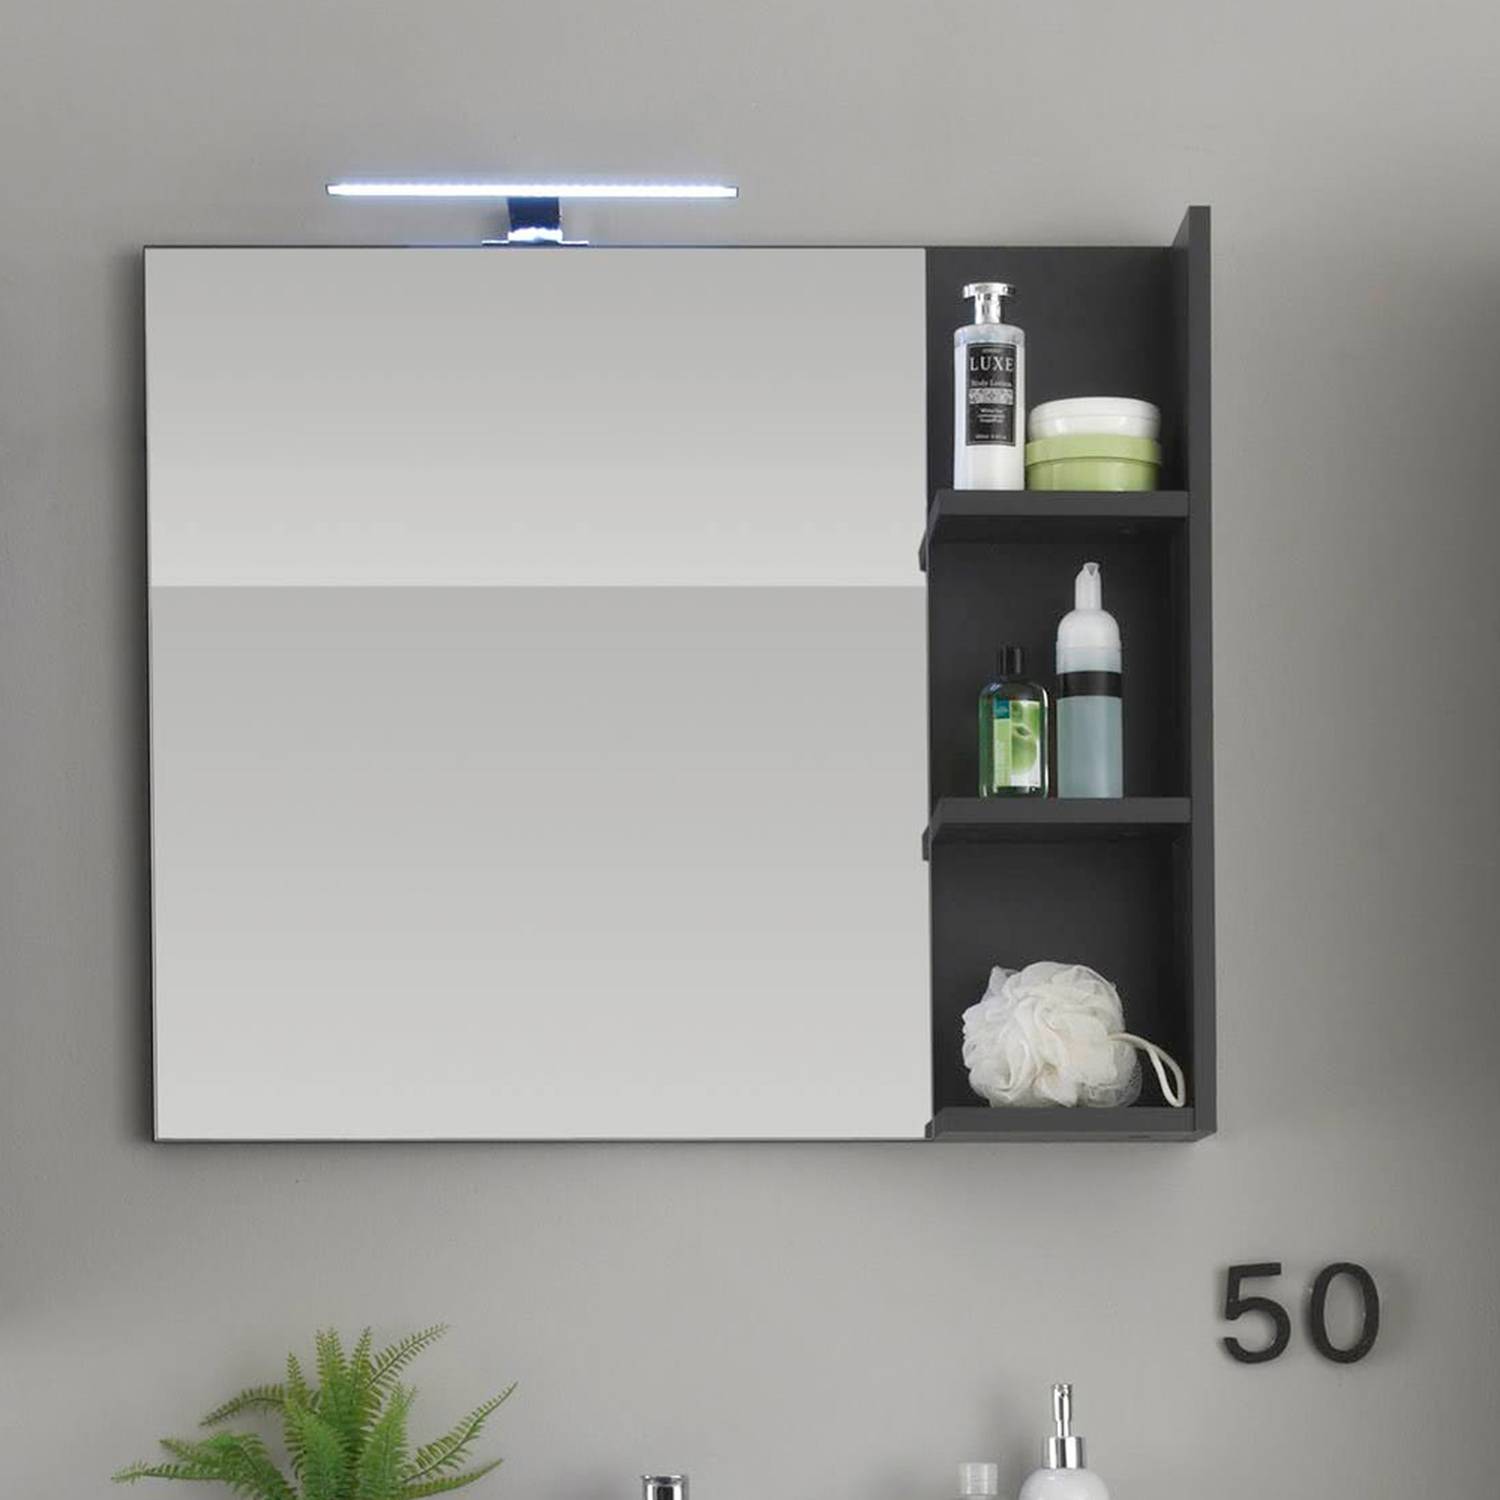 Nancy's Cambil Bathroom Mirror with Storage Compartments - Mirror Cabinet - Gray - 79 x 67 x 14 cm